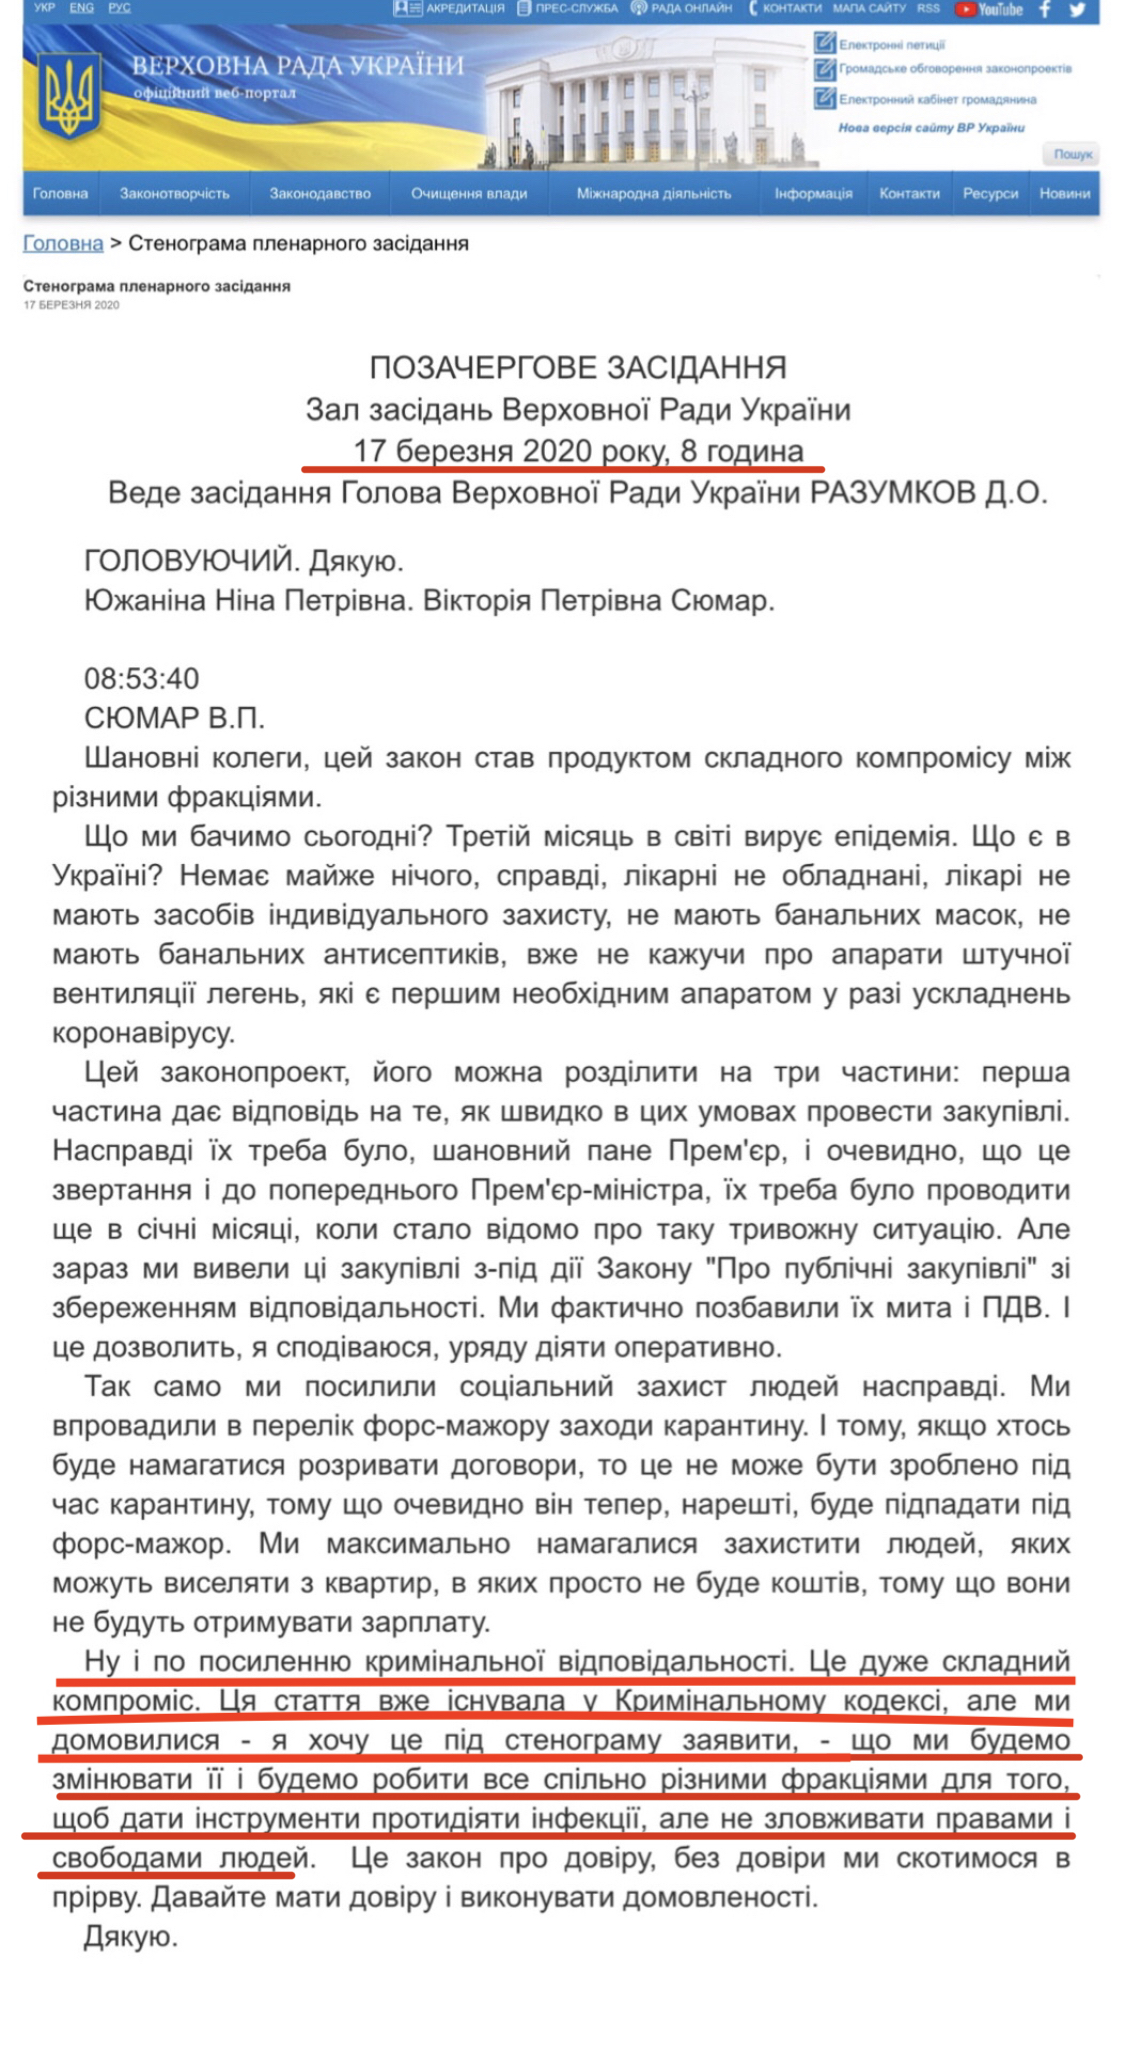 https://iportal.rada.gov.ua/meeting/stenogr/show/7392.html